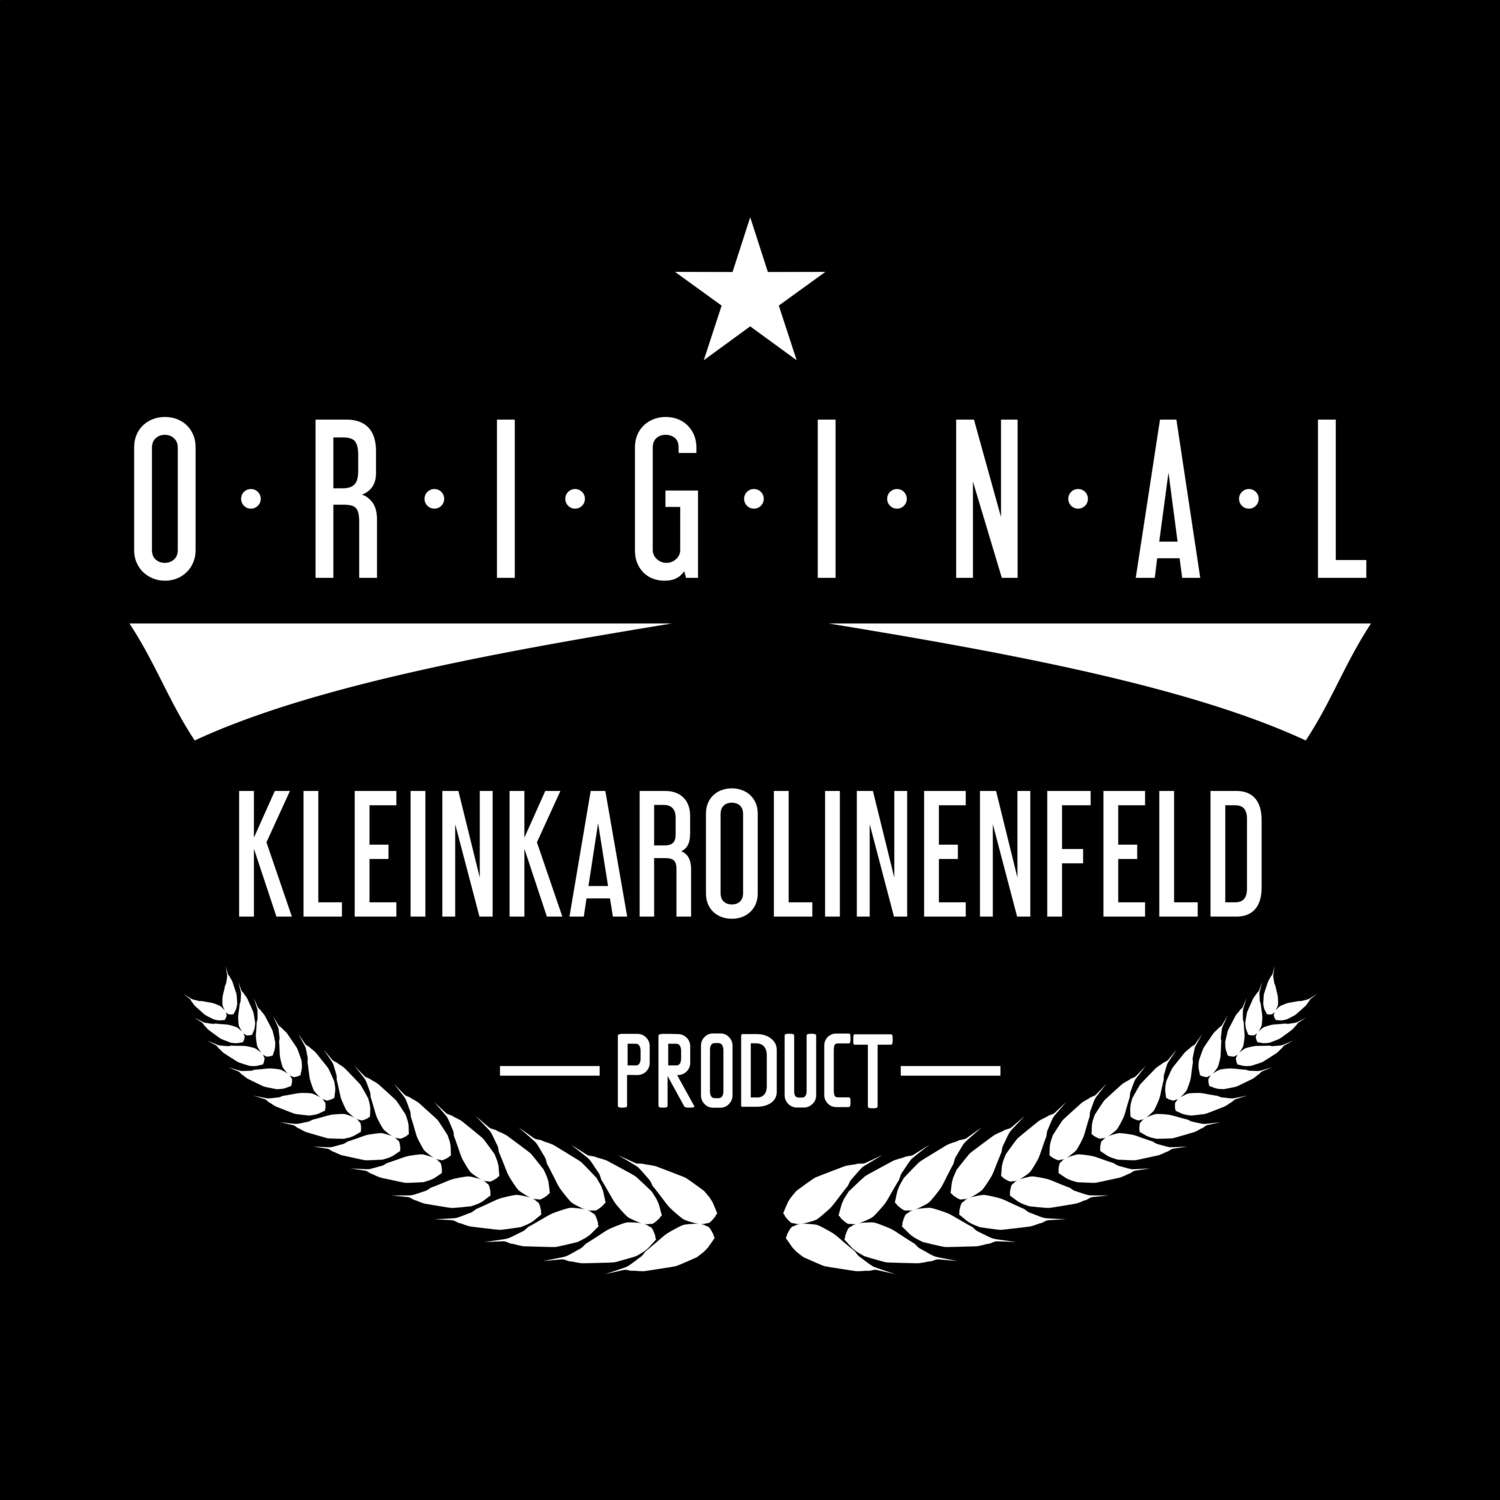 Kleinkarolinenfeld T-Shirt »Original Product«